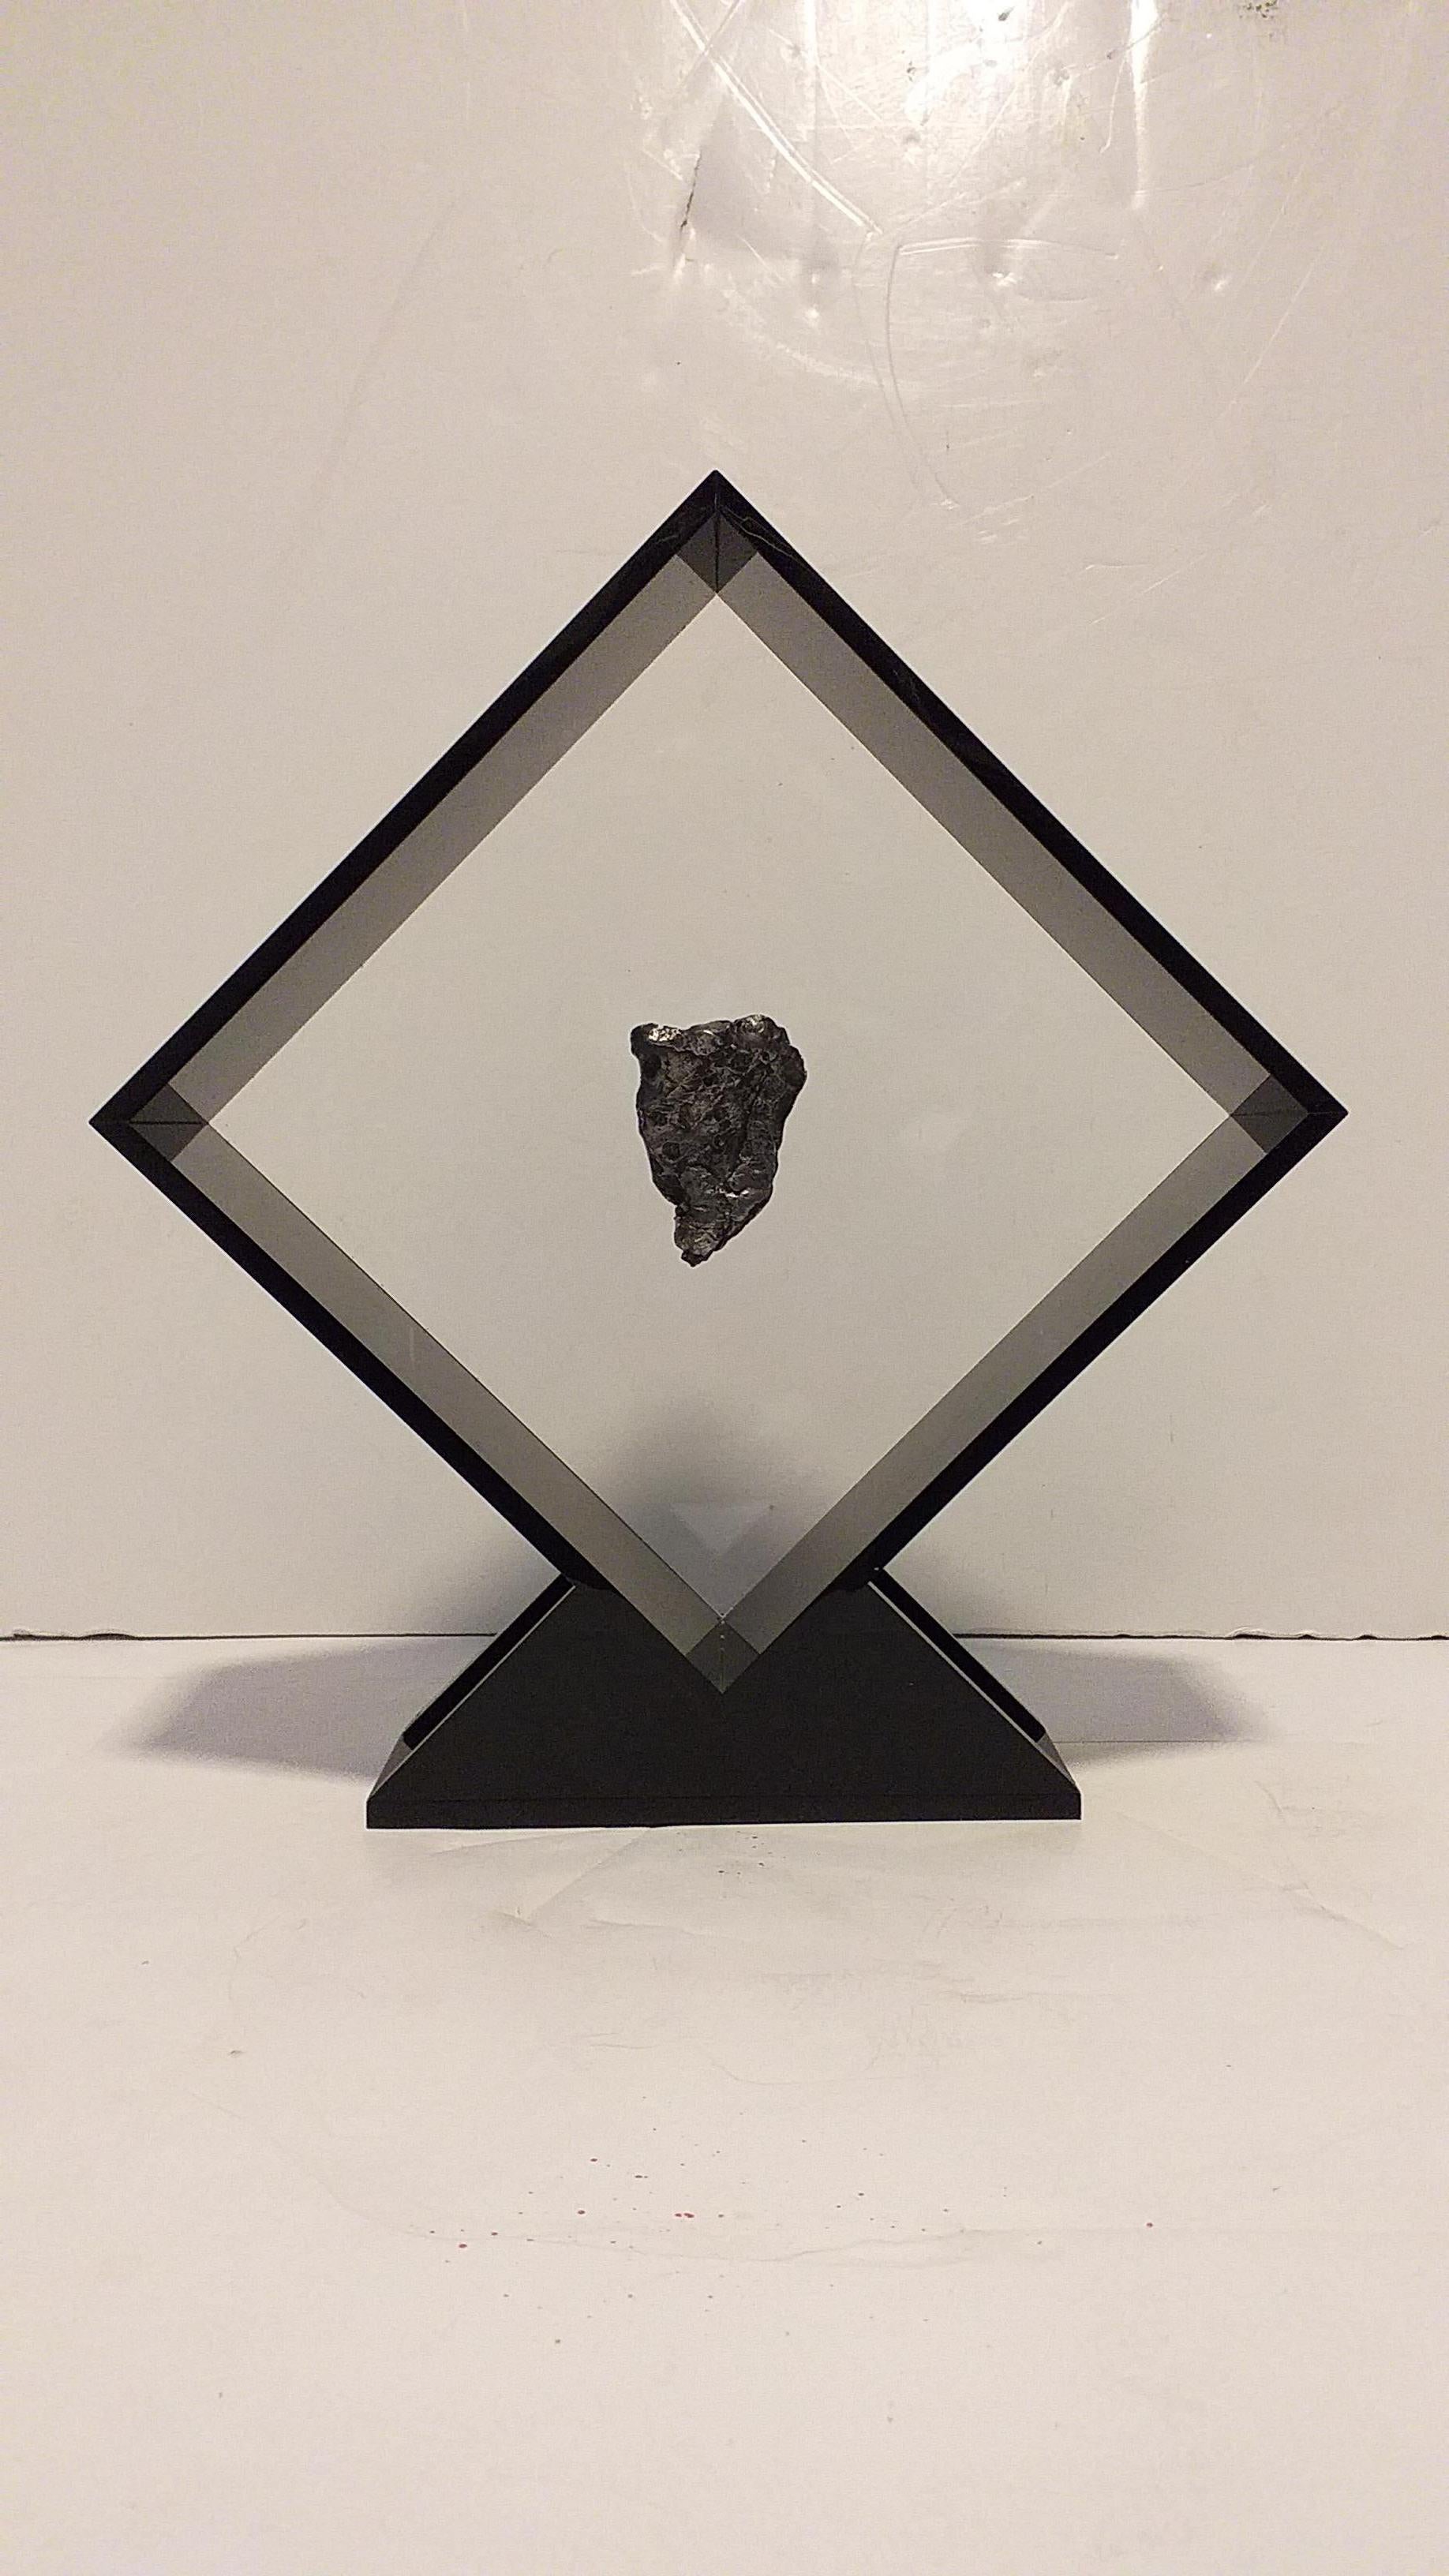 Sikhote Alin Meteorite from Siberia, Russia in a Custom Acrylic Display